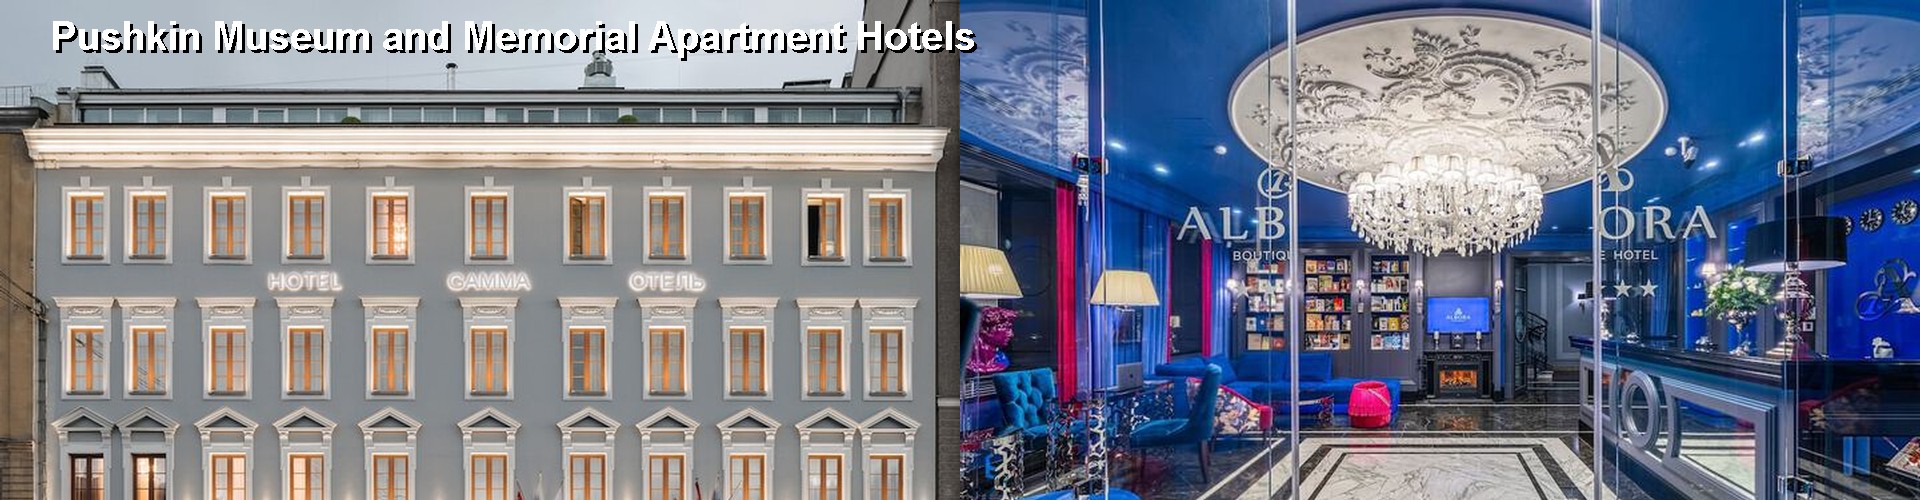 5 Best Hotels near Pushkin Museum and Memorial Apartment